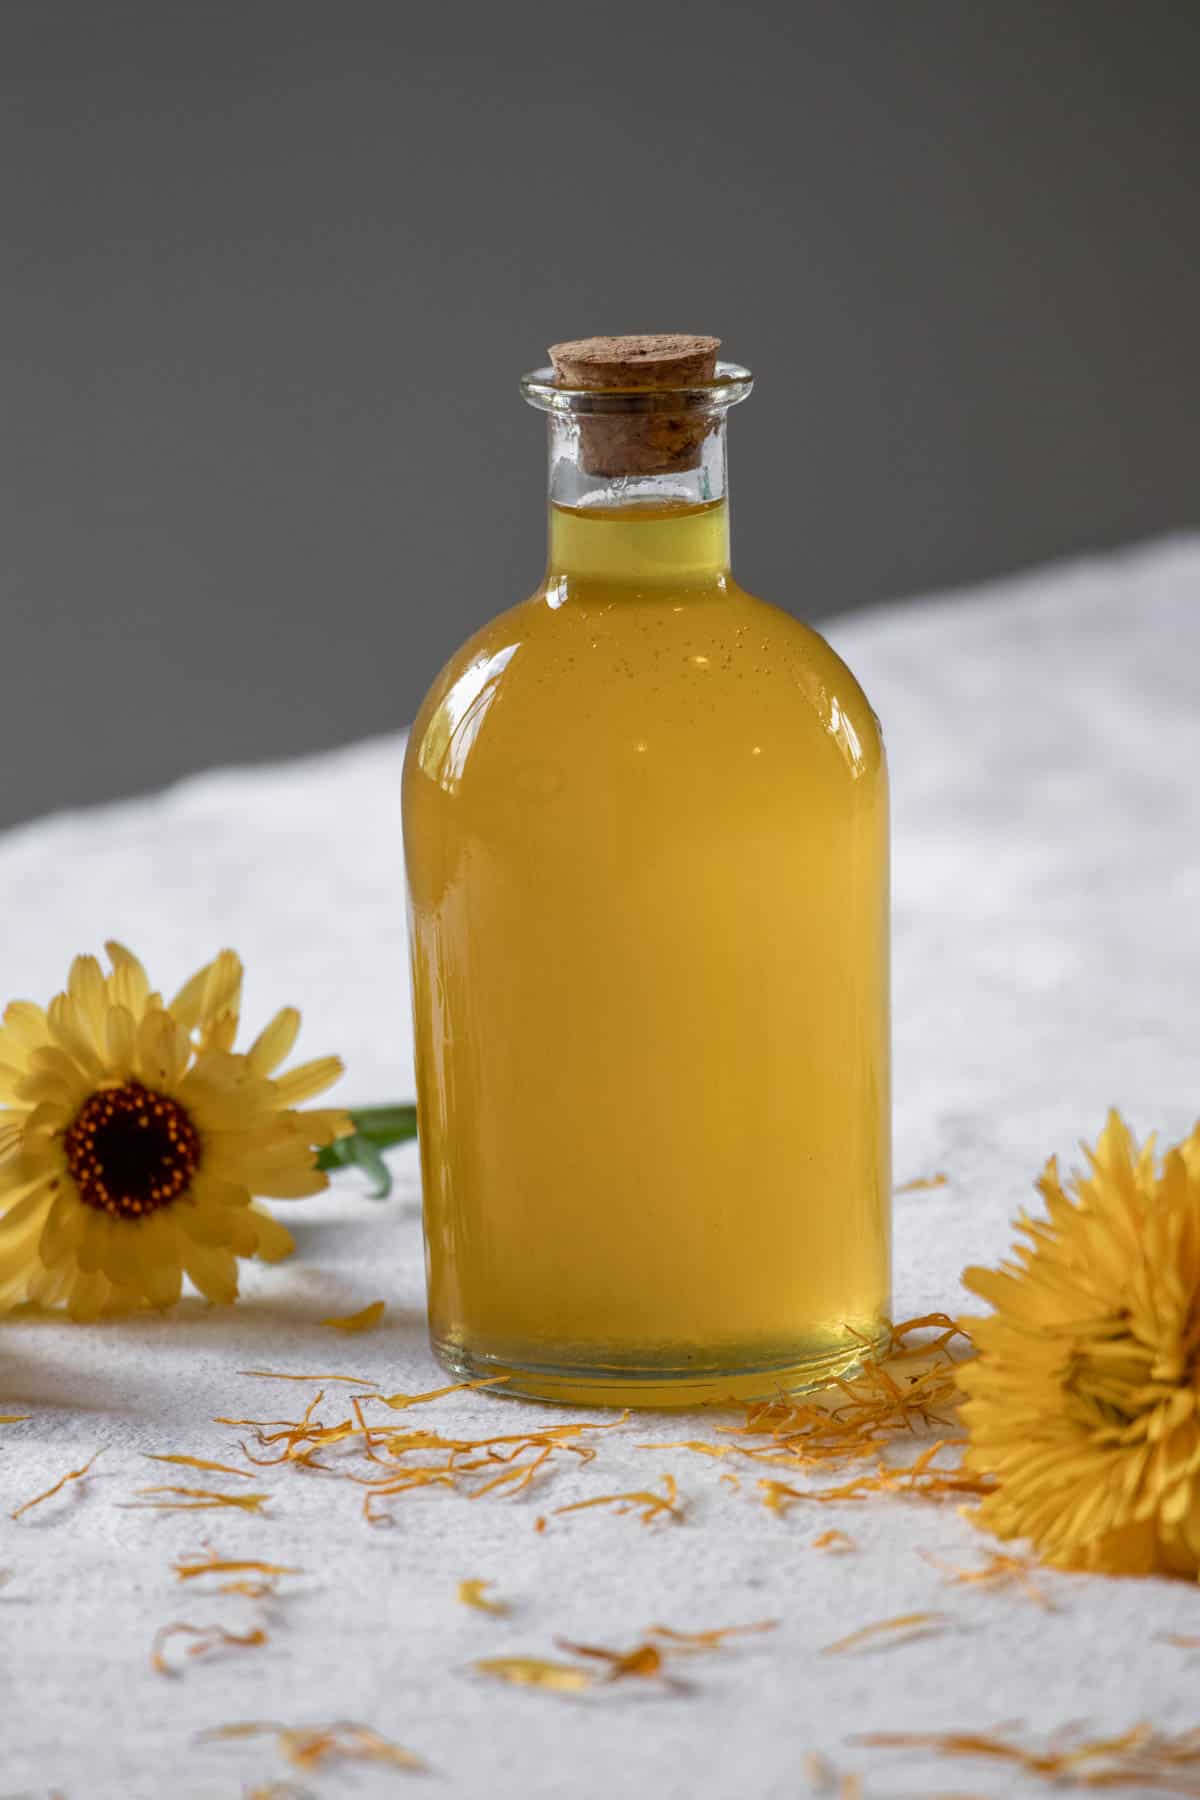 A bottle of calendula oil next to calendula flowers